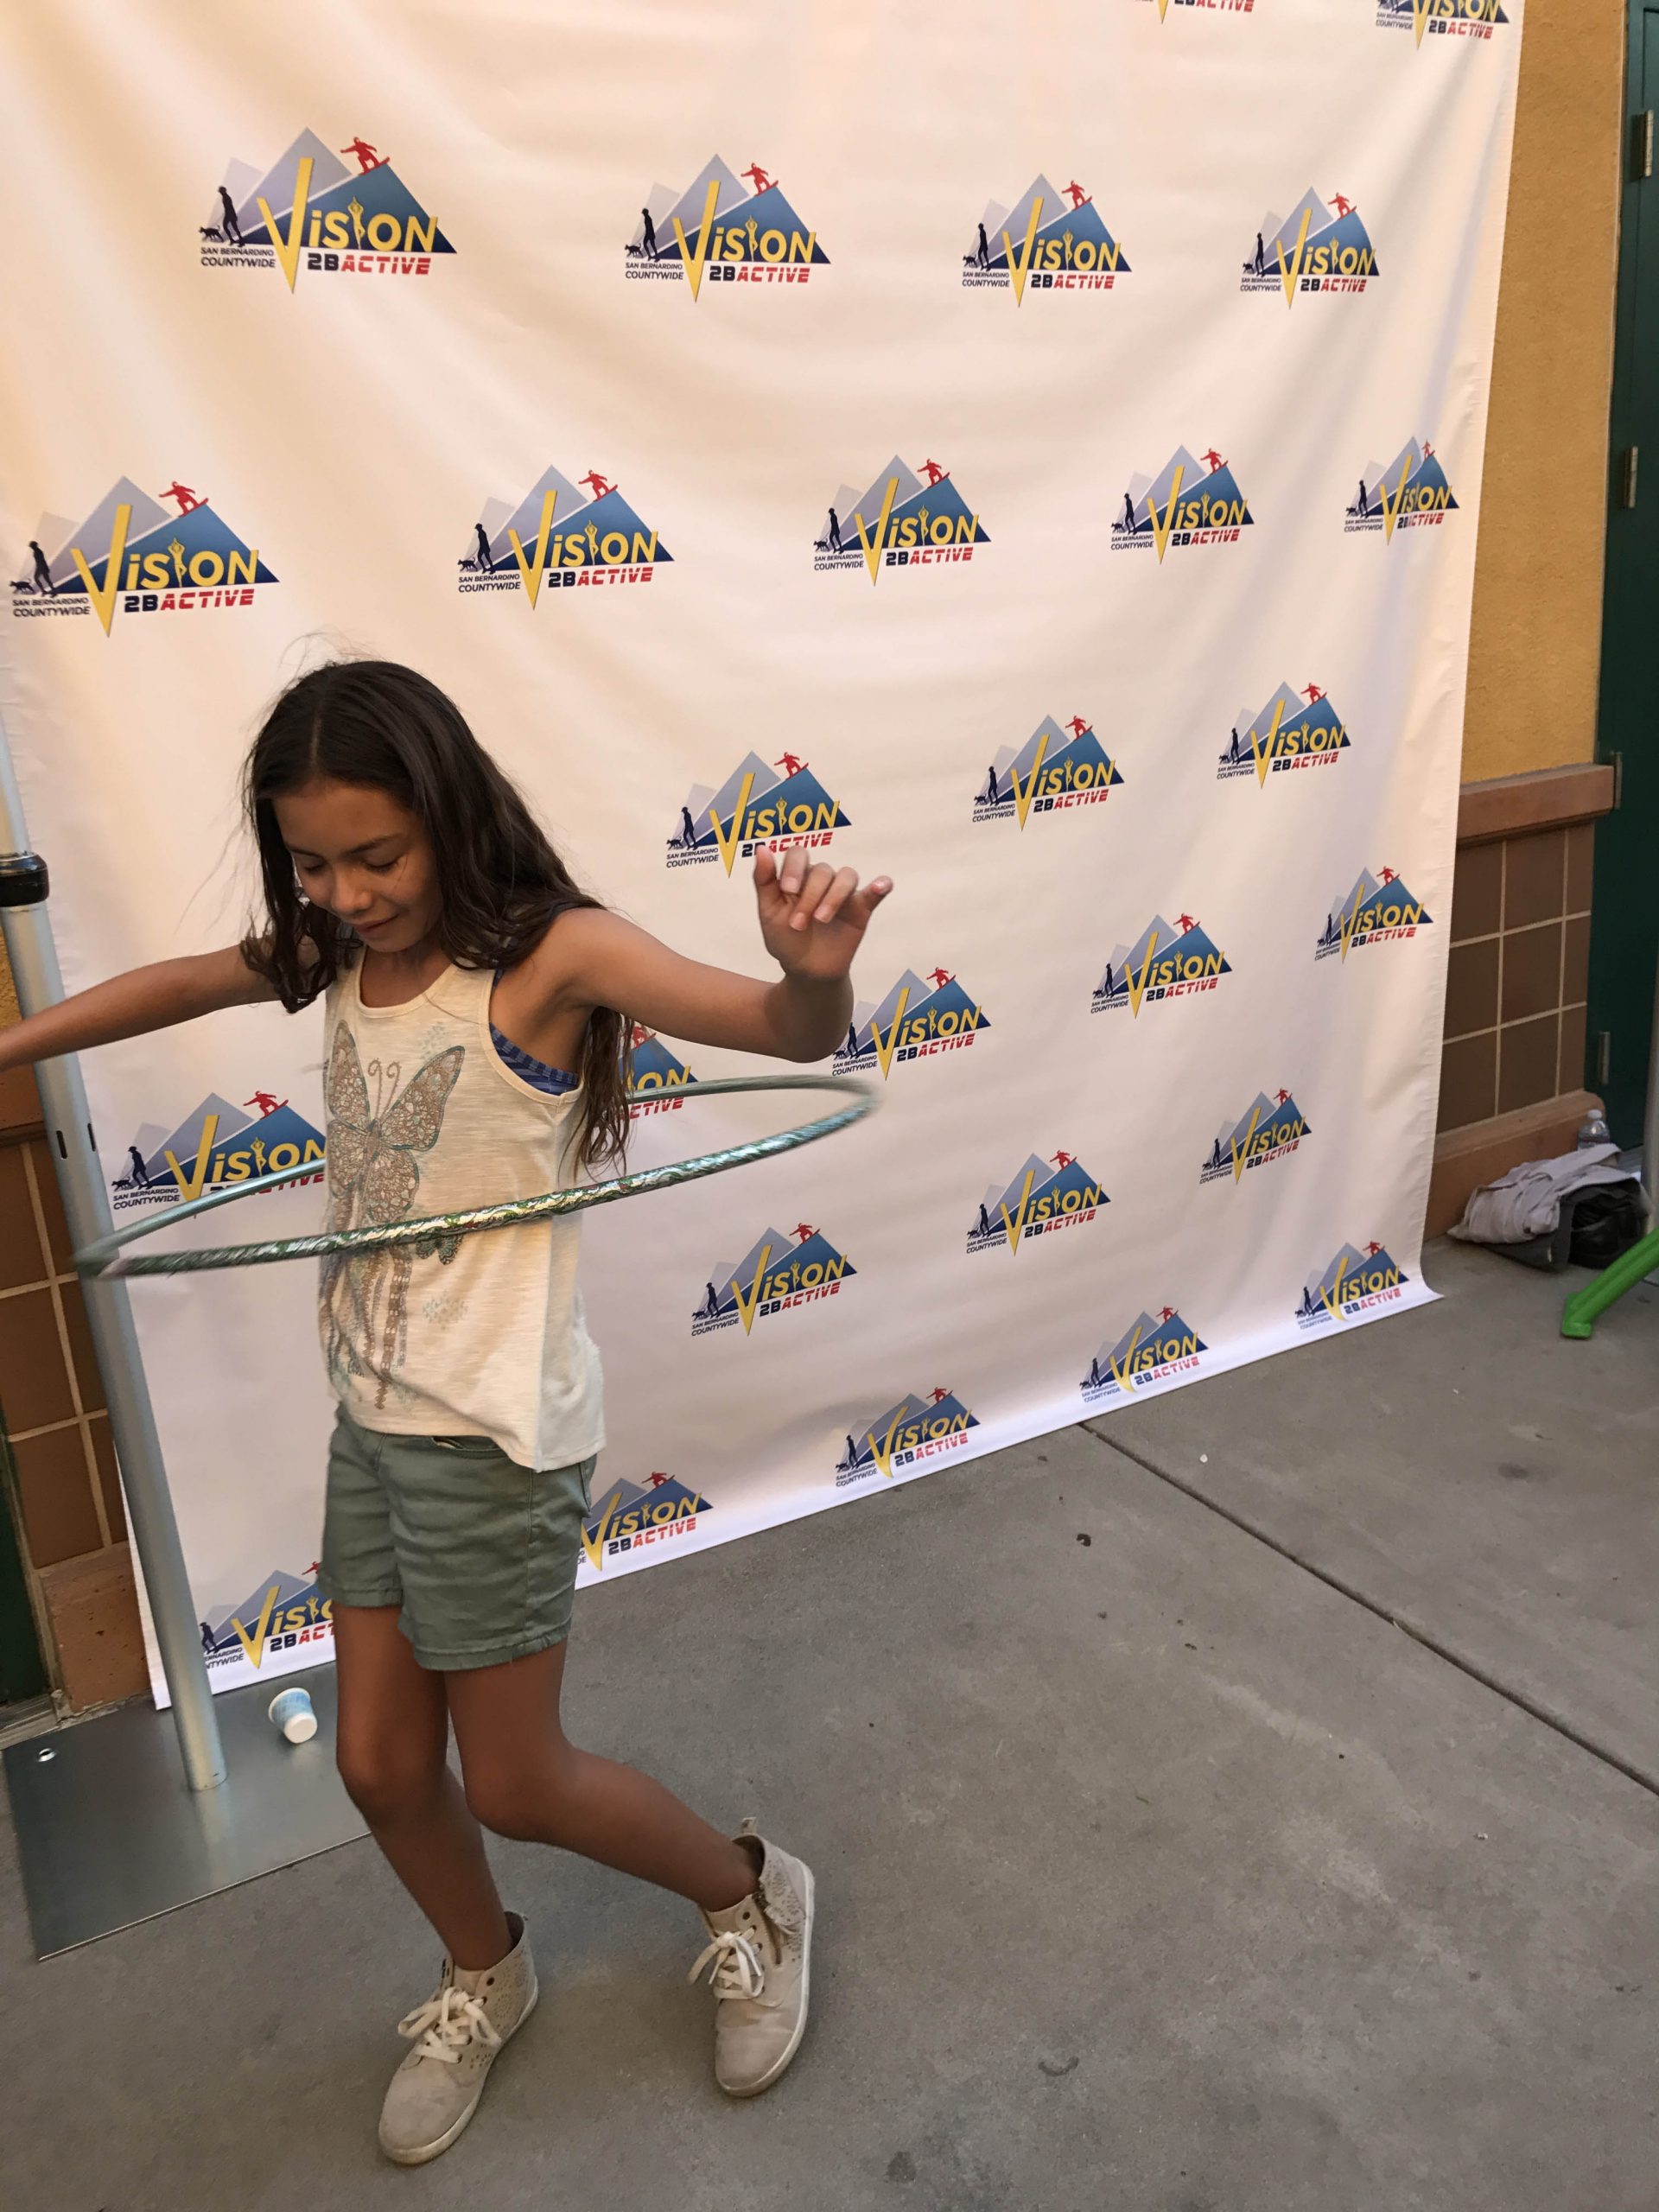 Child with hula hoop